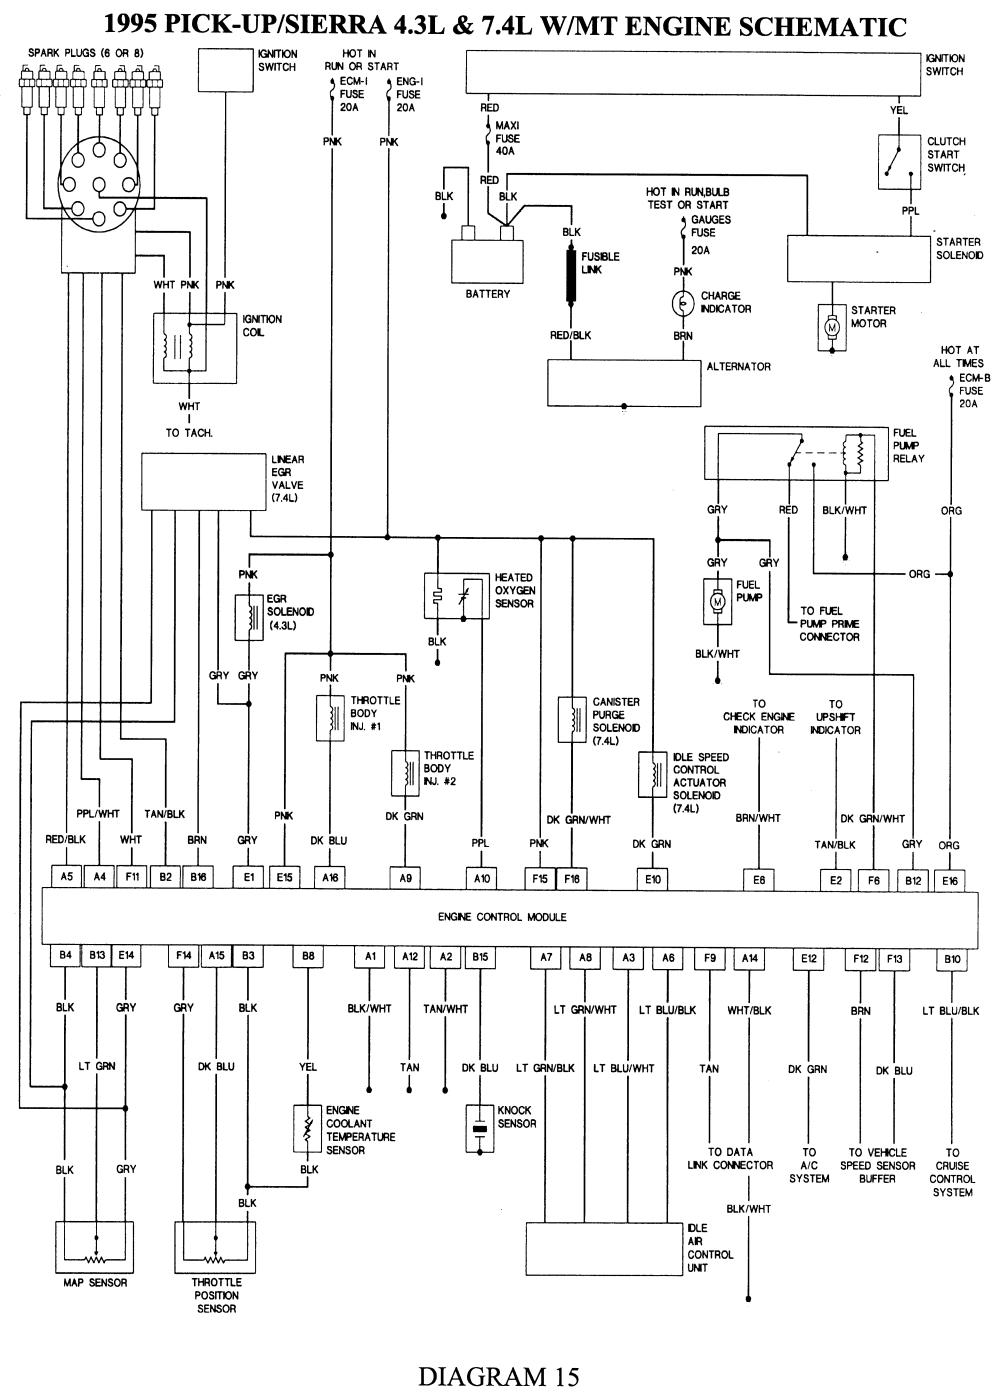 1998 Chevy Silverado Ignition Wiring Diagram from econtent.autozone.com